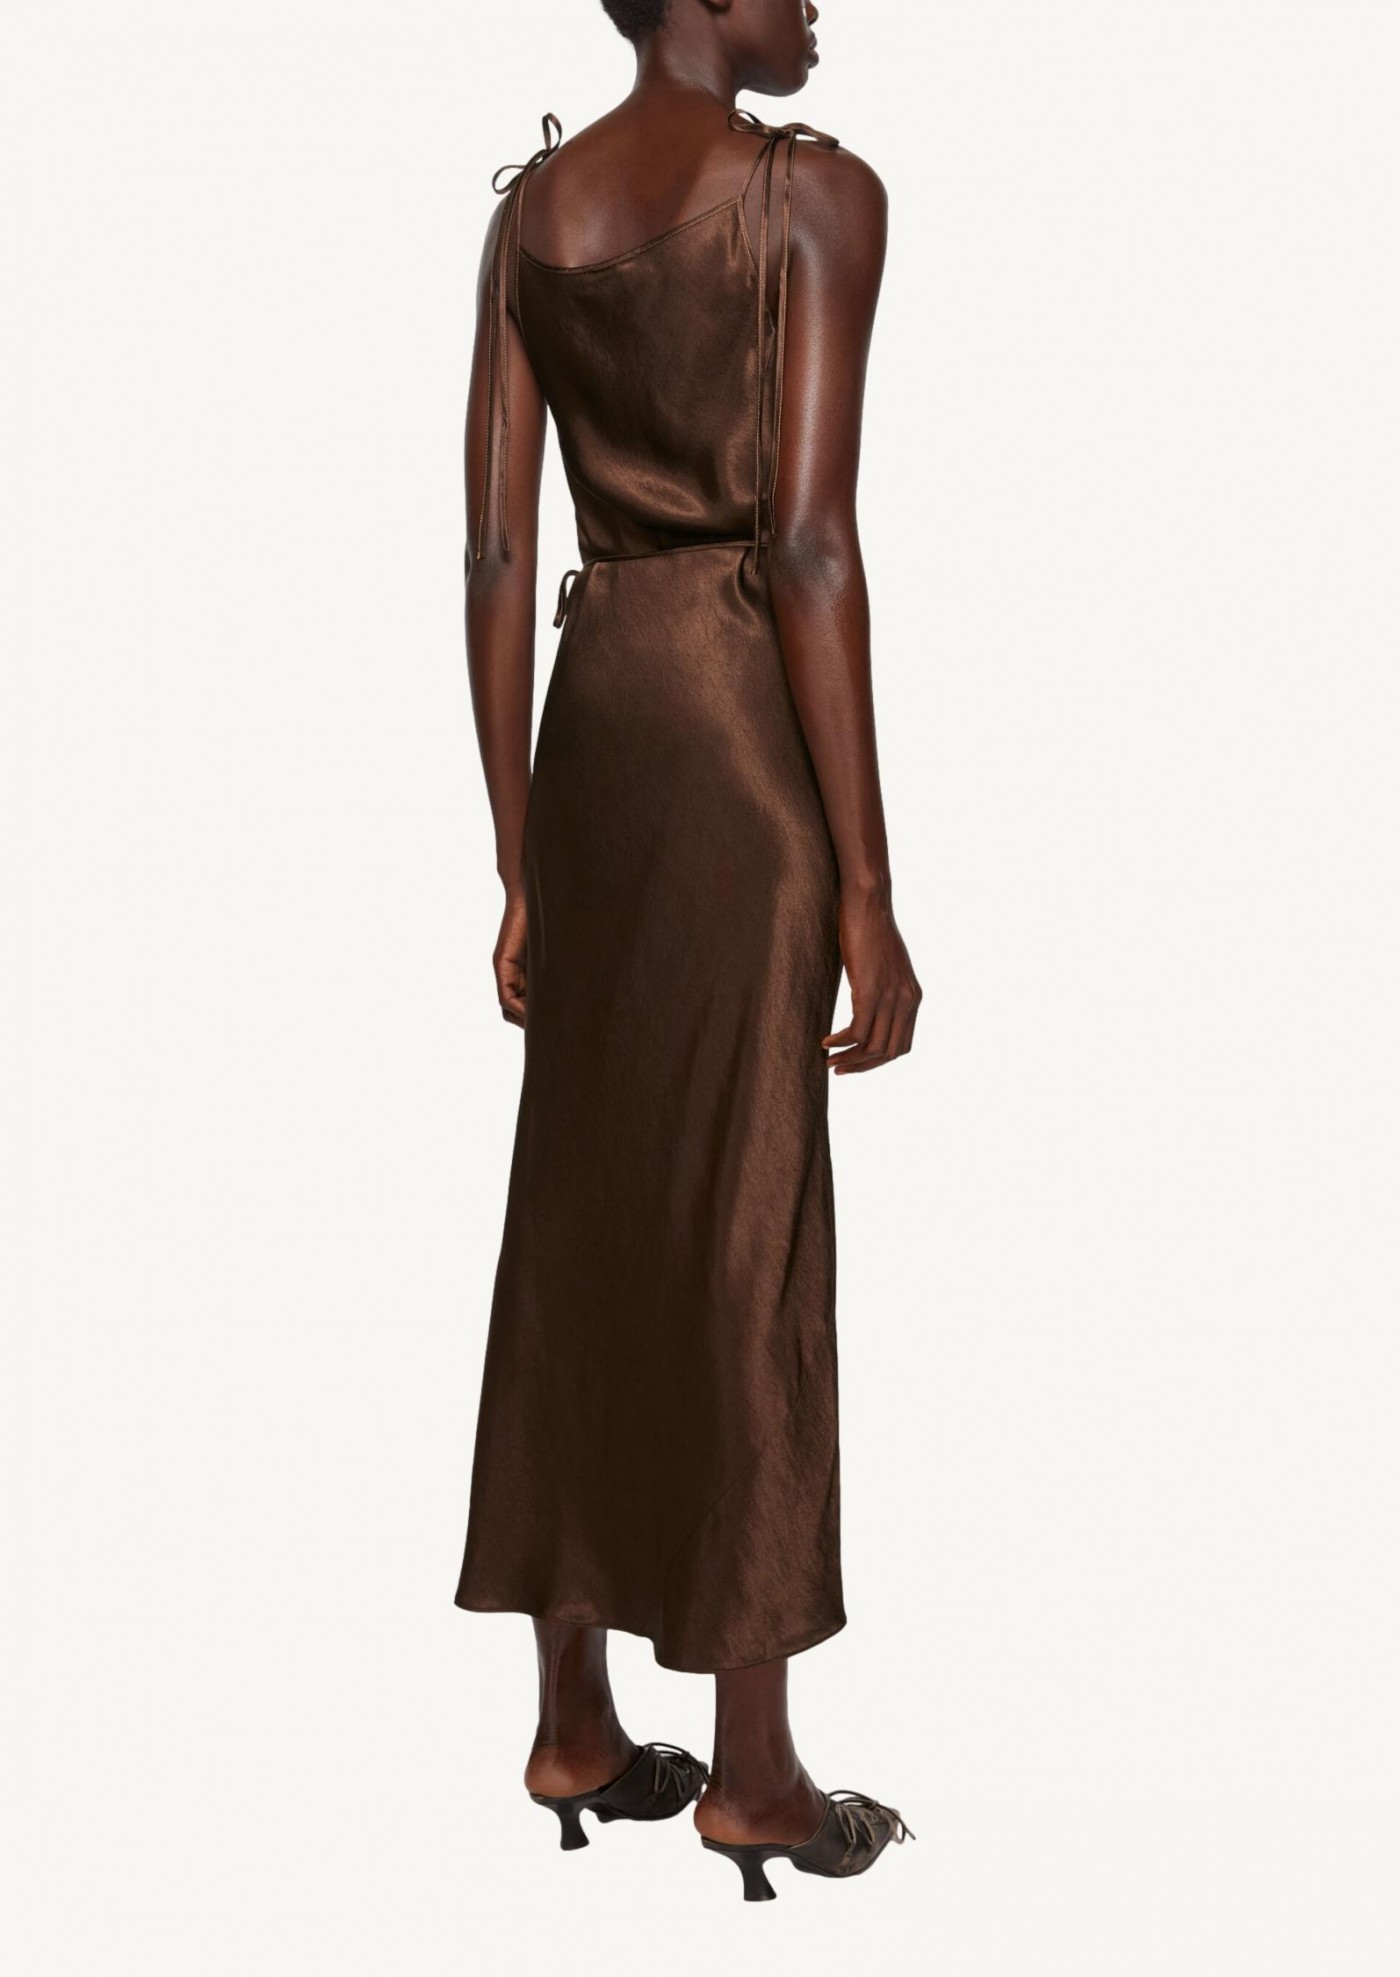 Chocolate brown satin dress